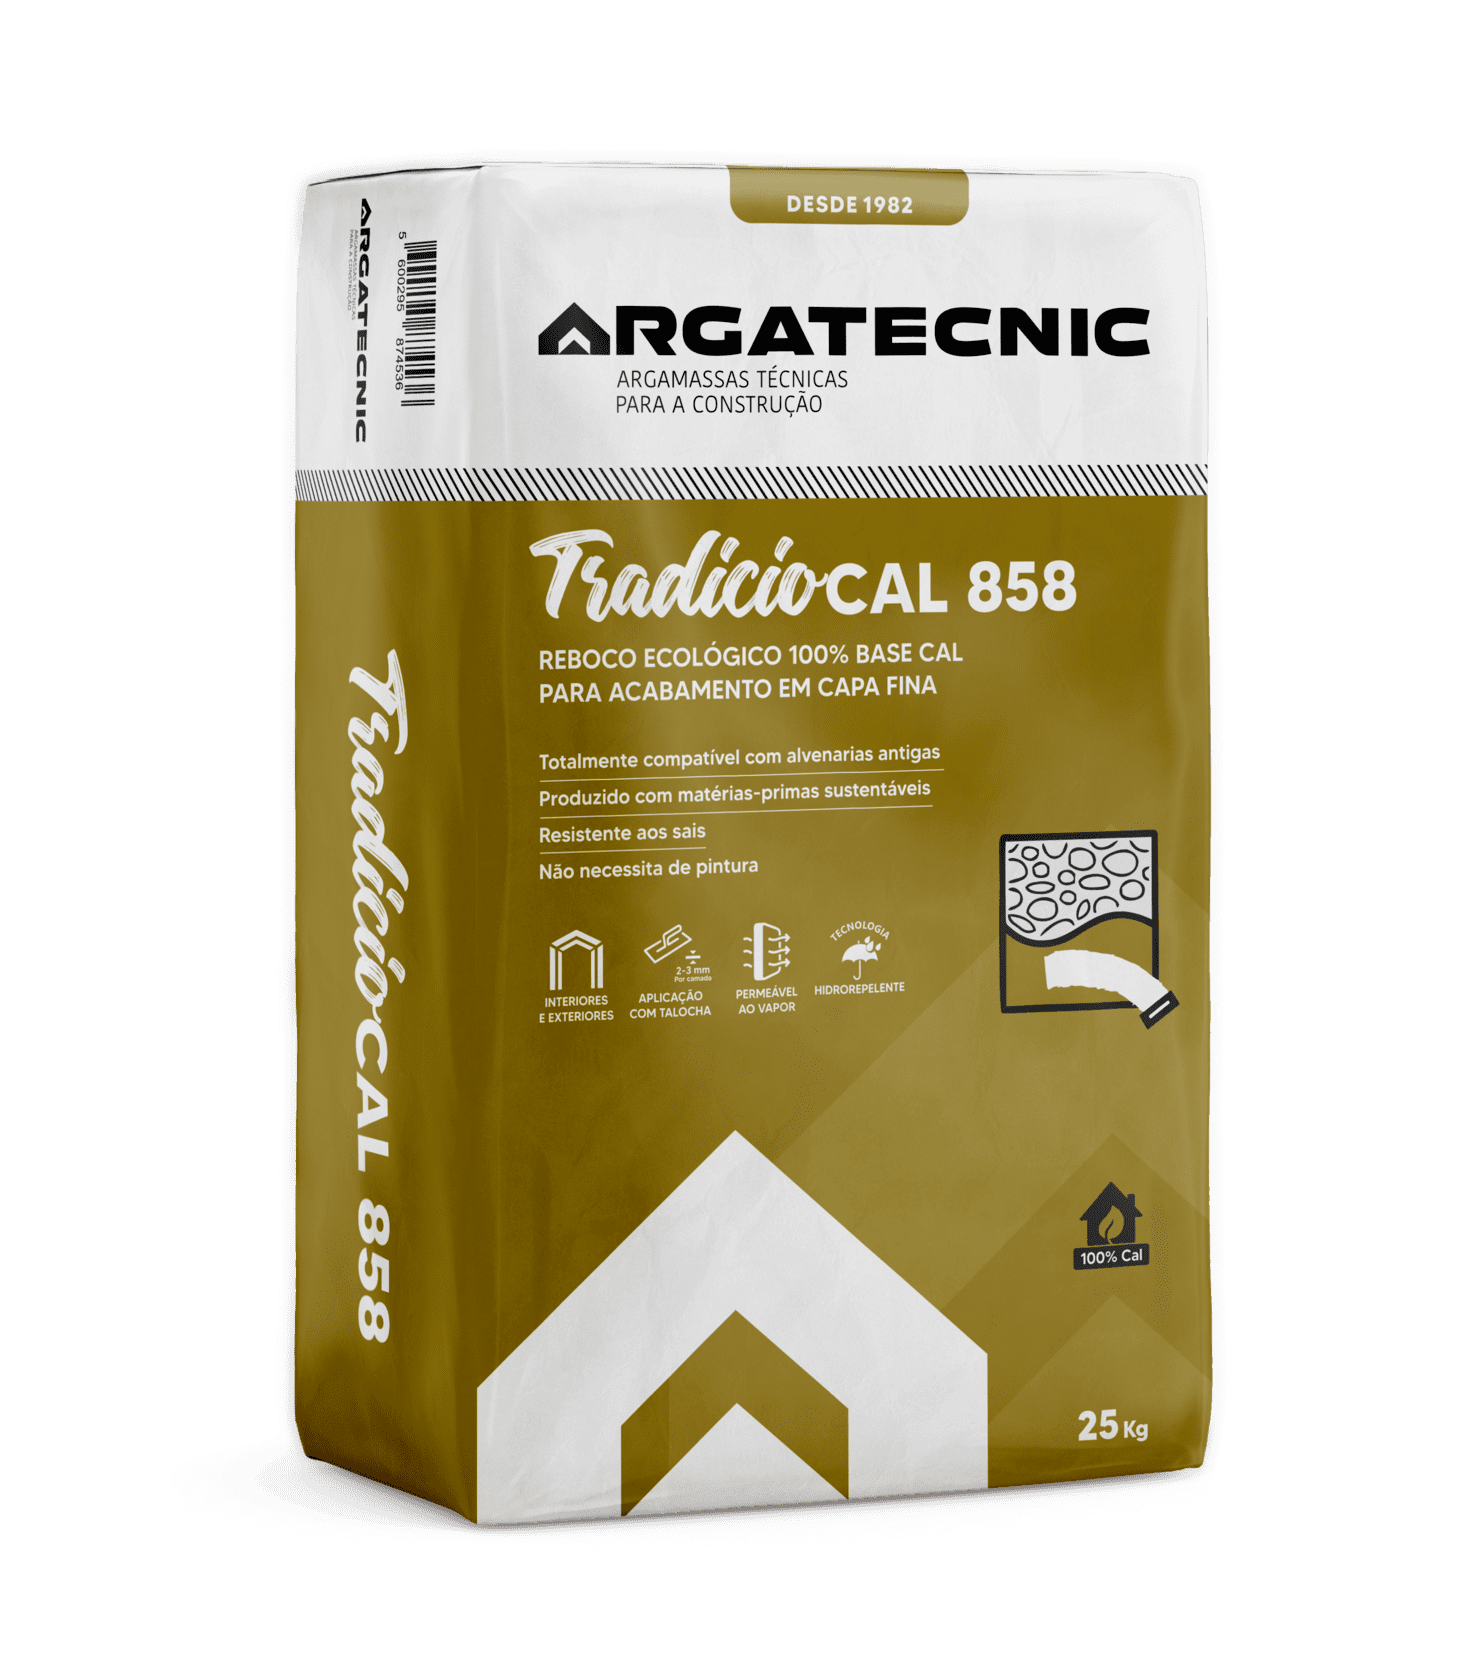 tradiciocal-858-argatecnic